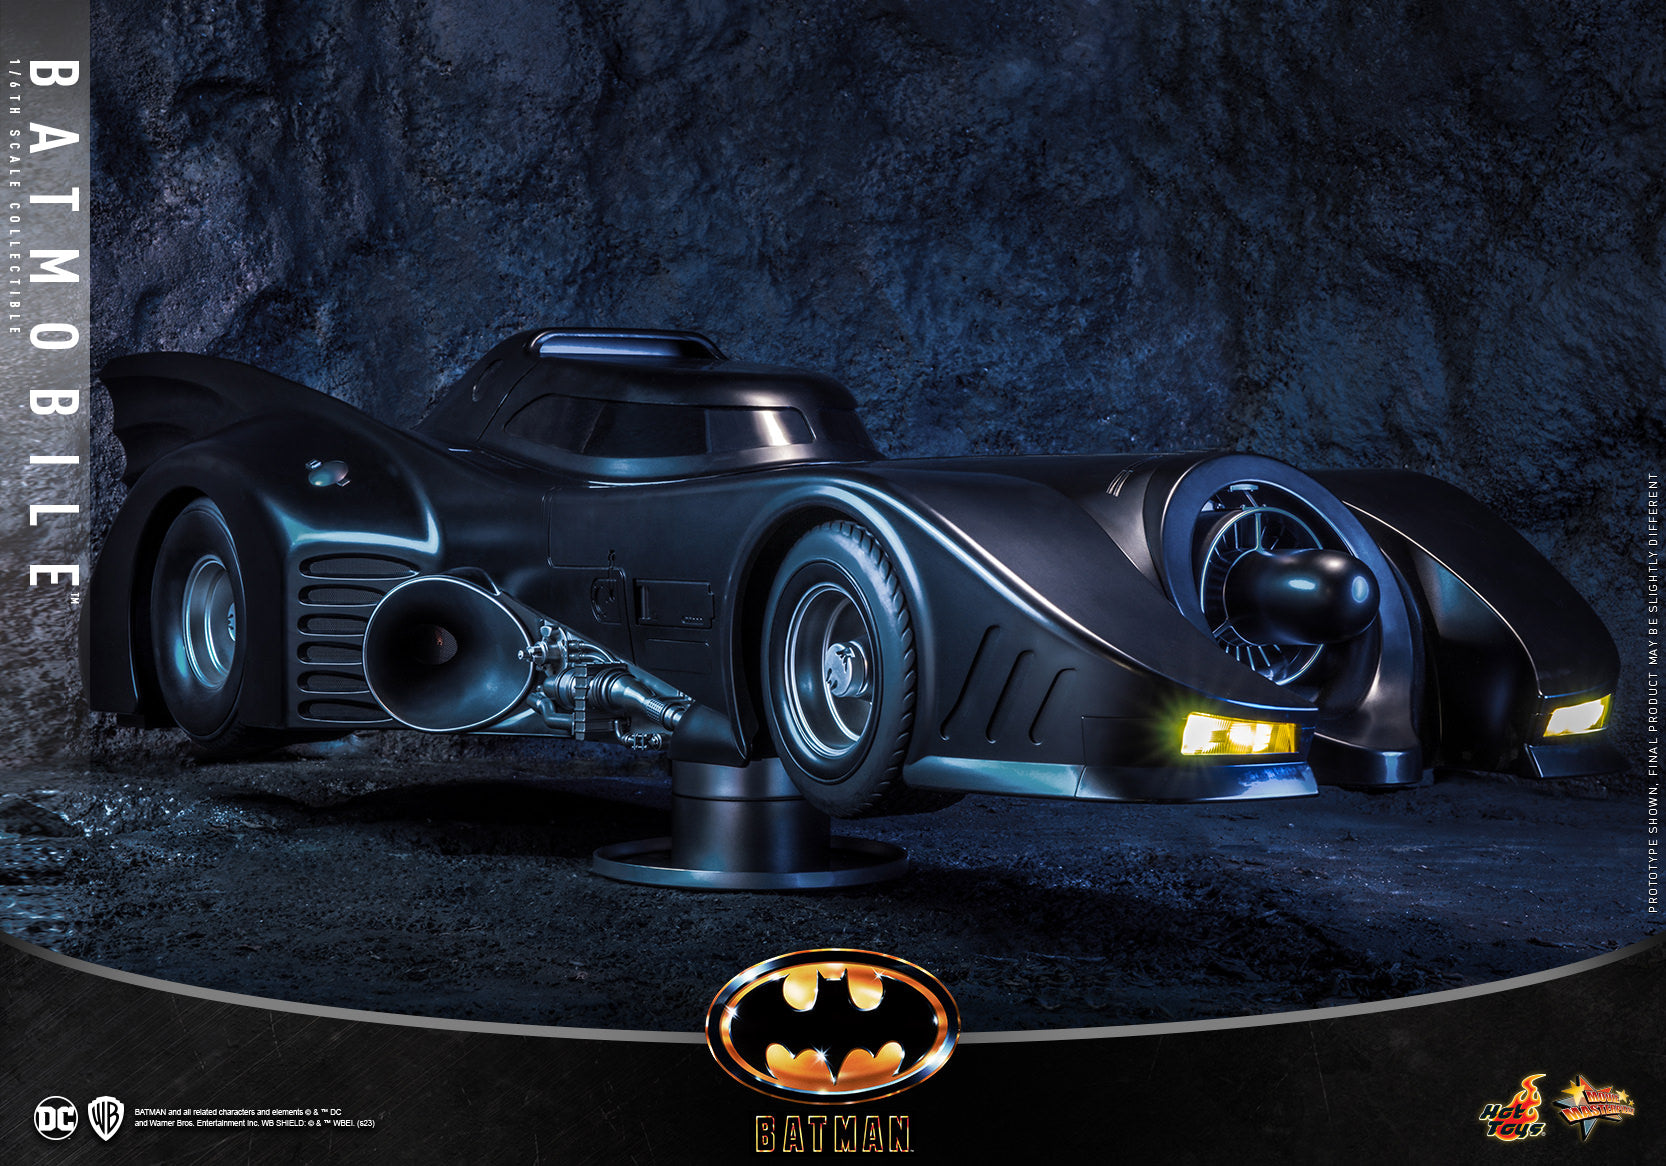 Batmobile: Batman 1989: MMS694 Hot Toys